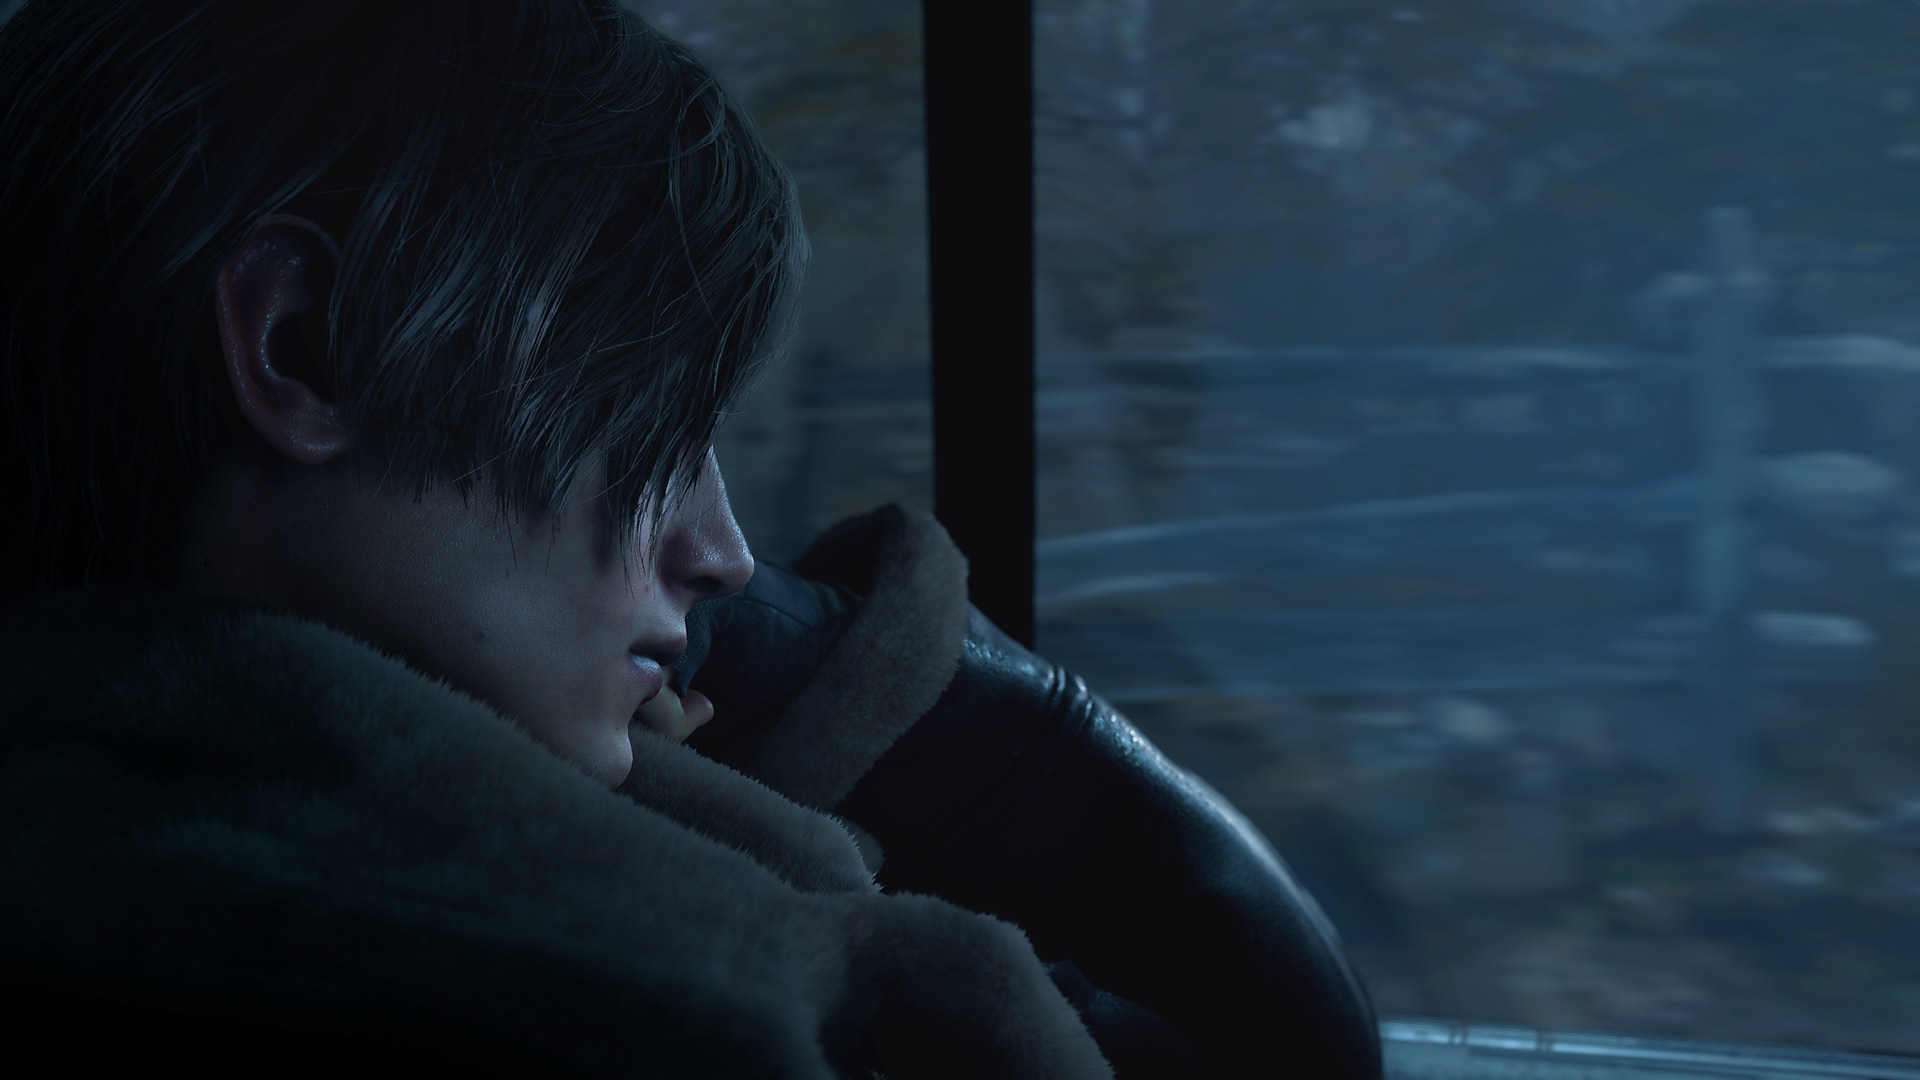 Captura de pantalla de Resident Evil 4 con Leon Kennedy en la parte trasera de un carro.